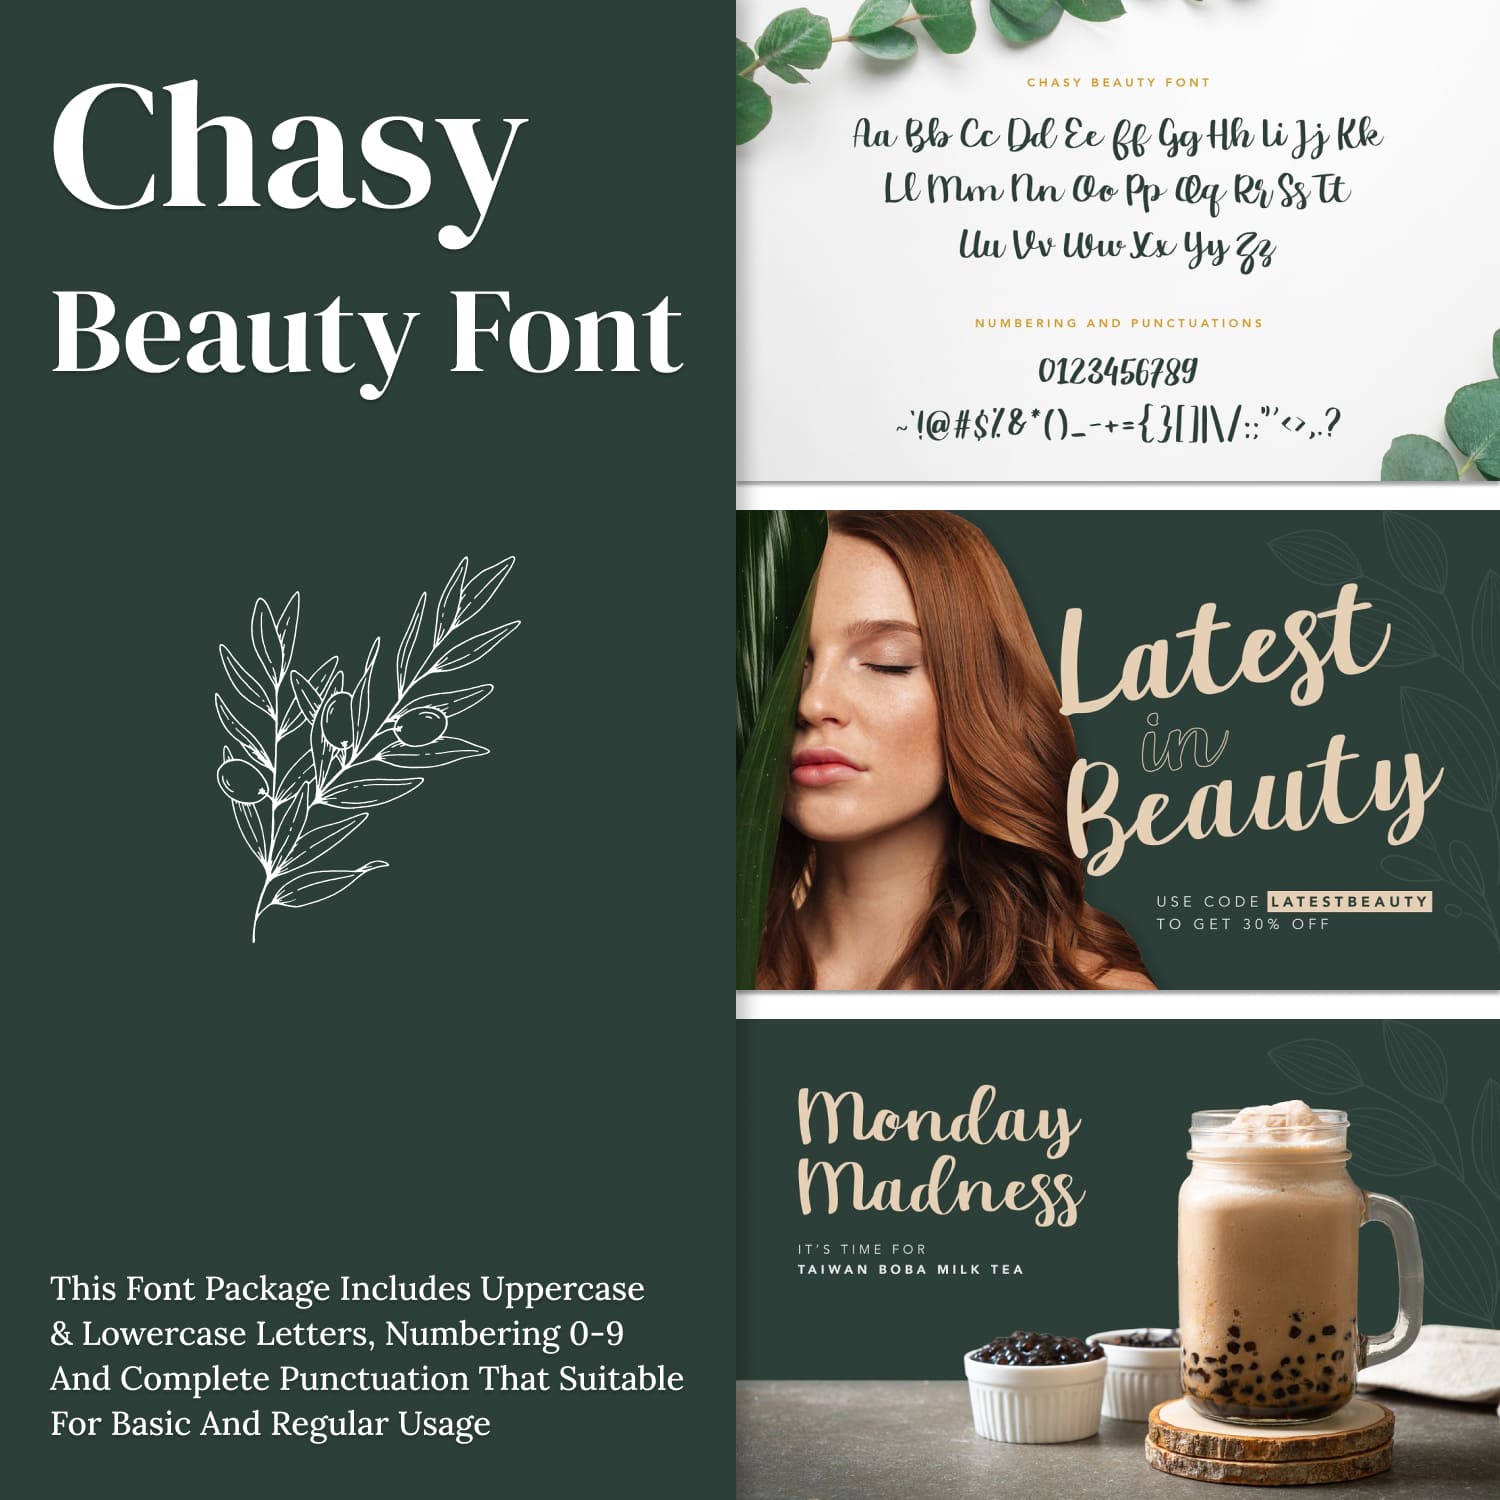 Chasy Beauty Font.